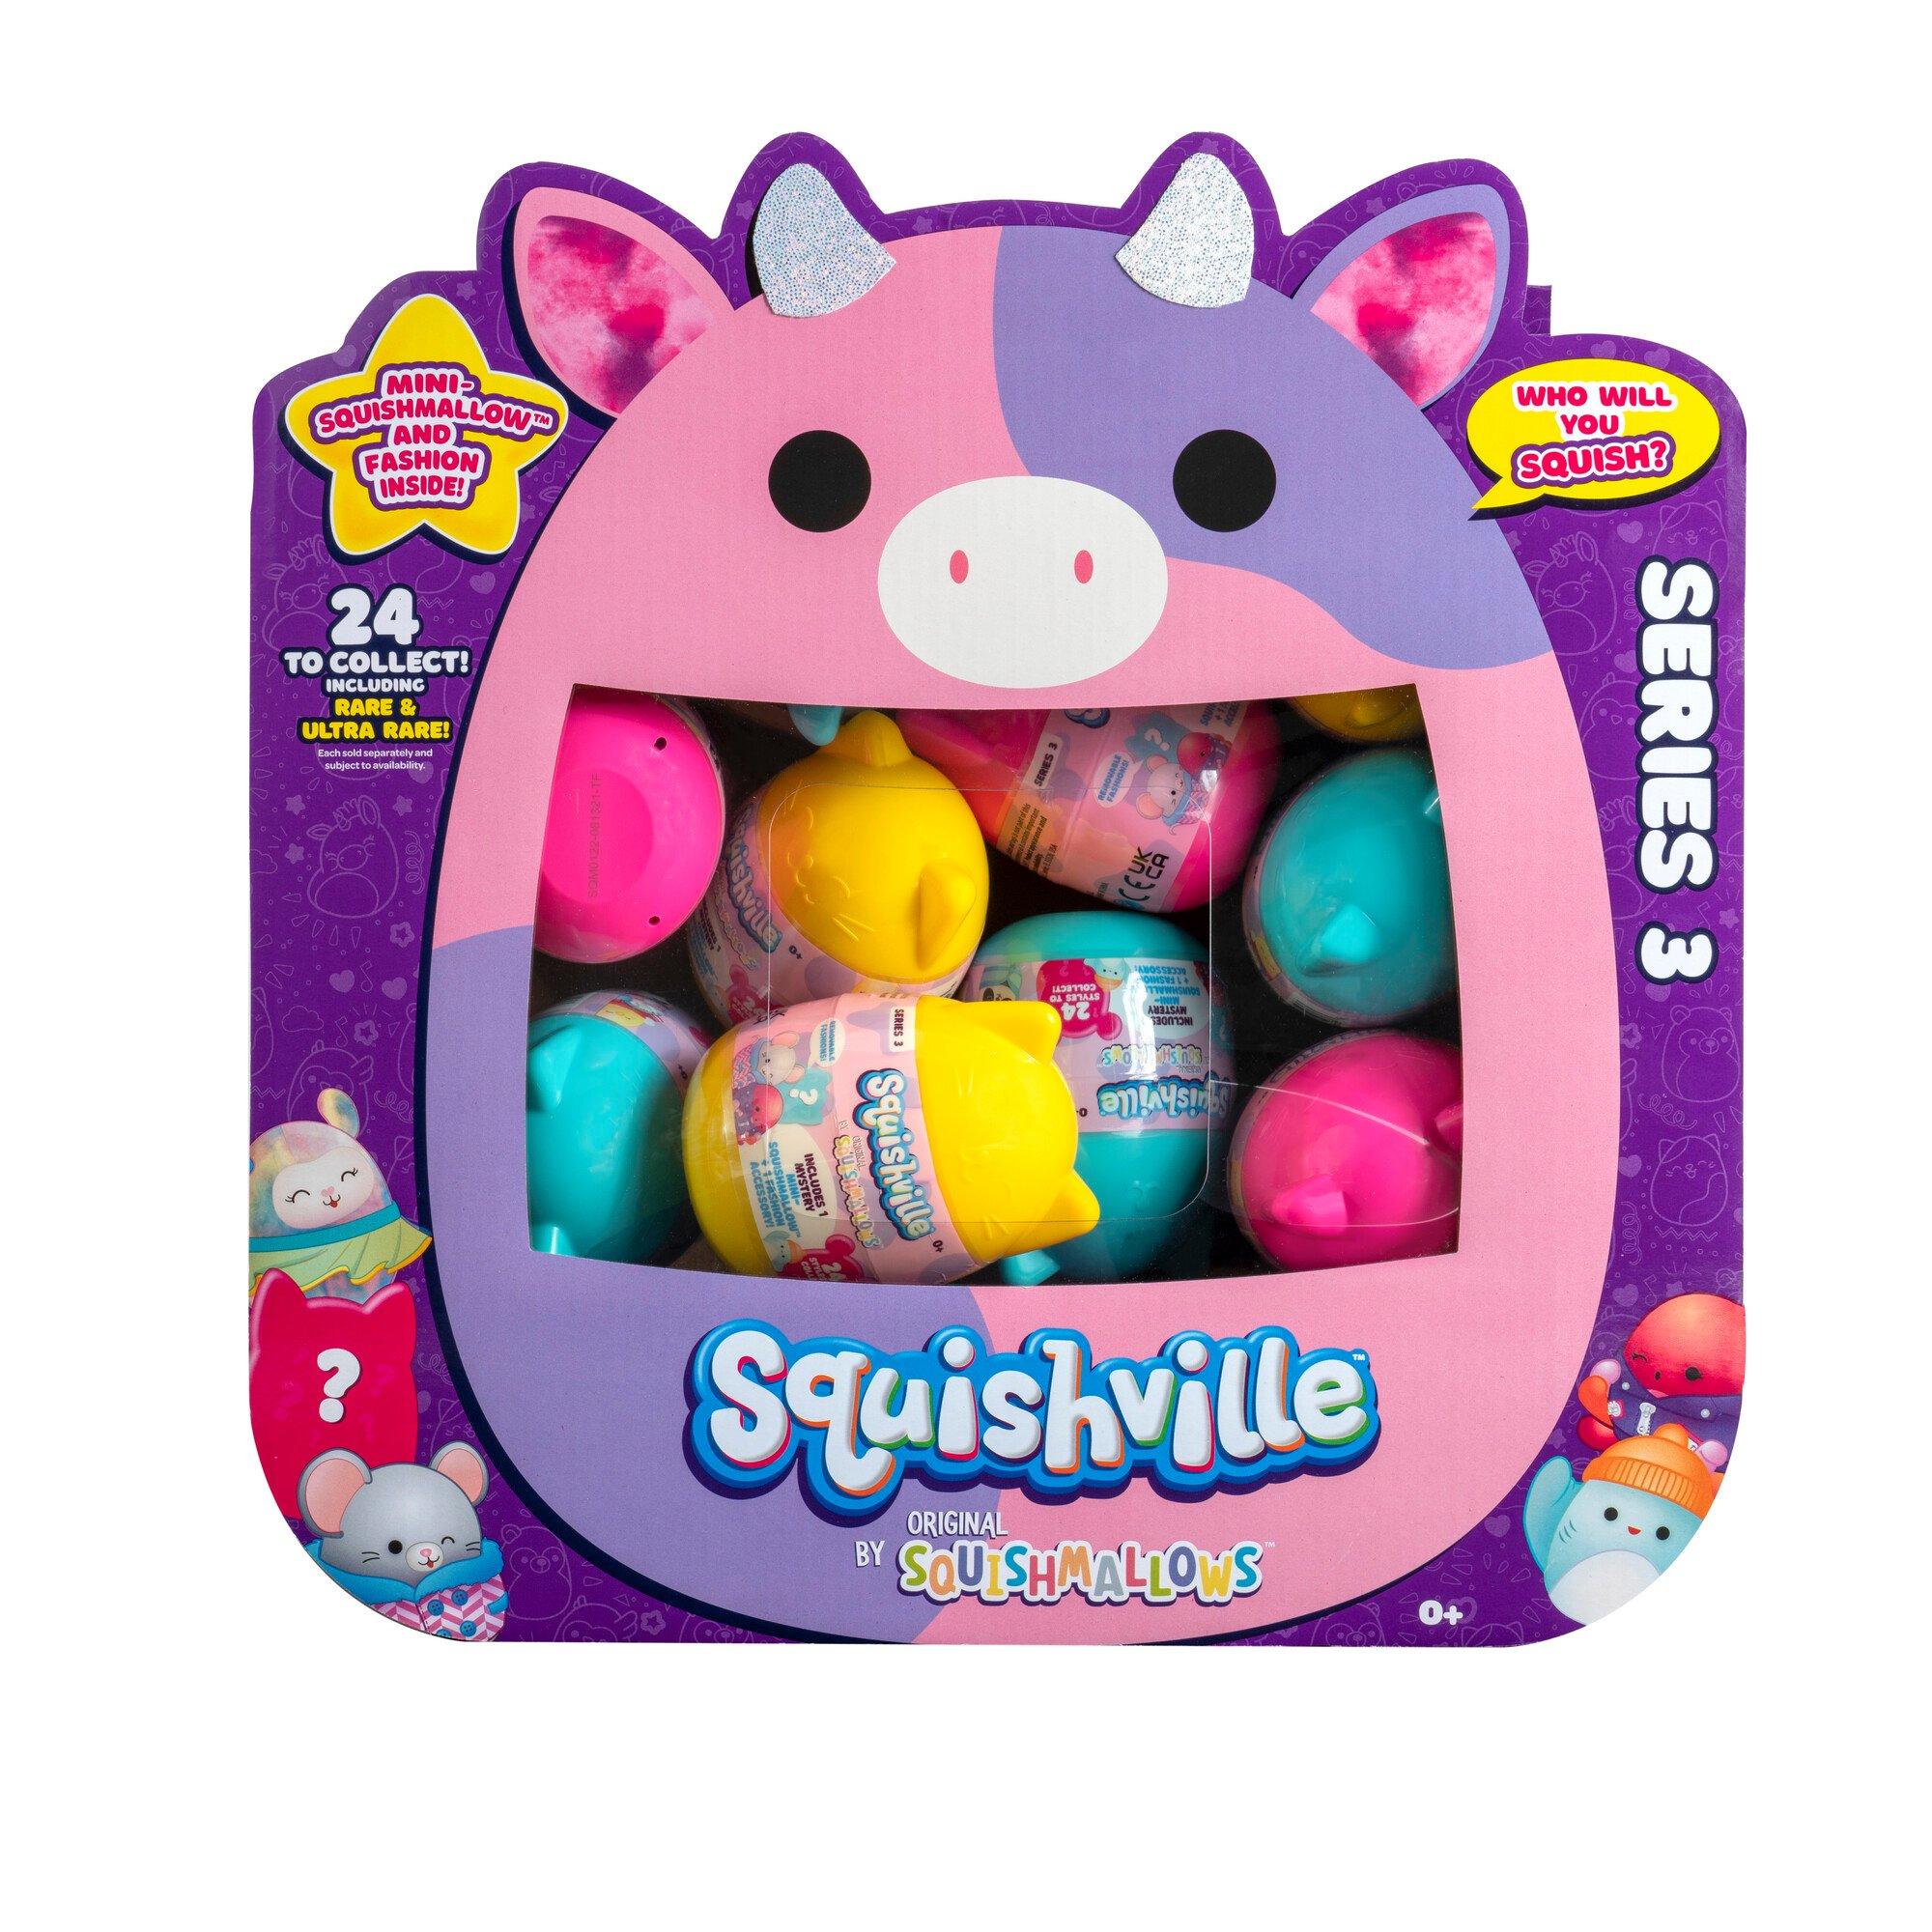 https://media.gamestop.com/i/gamestop/11136909/Squishmallows-Squishville-Mystery-Mini-Plush-Blind-Bag-Series-3